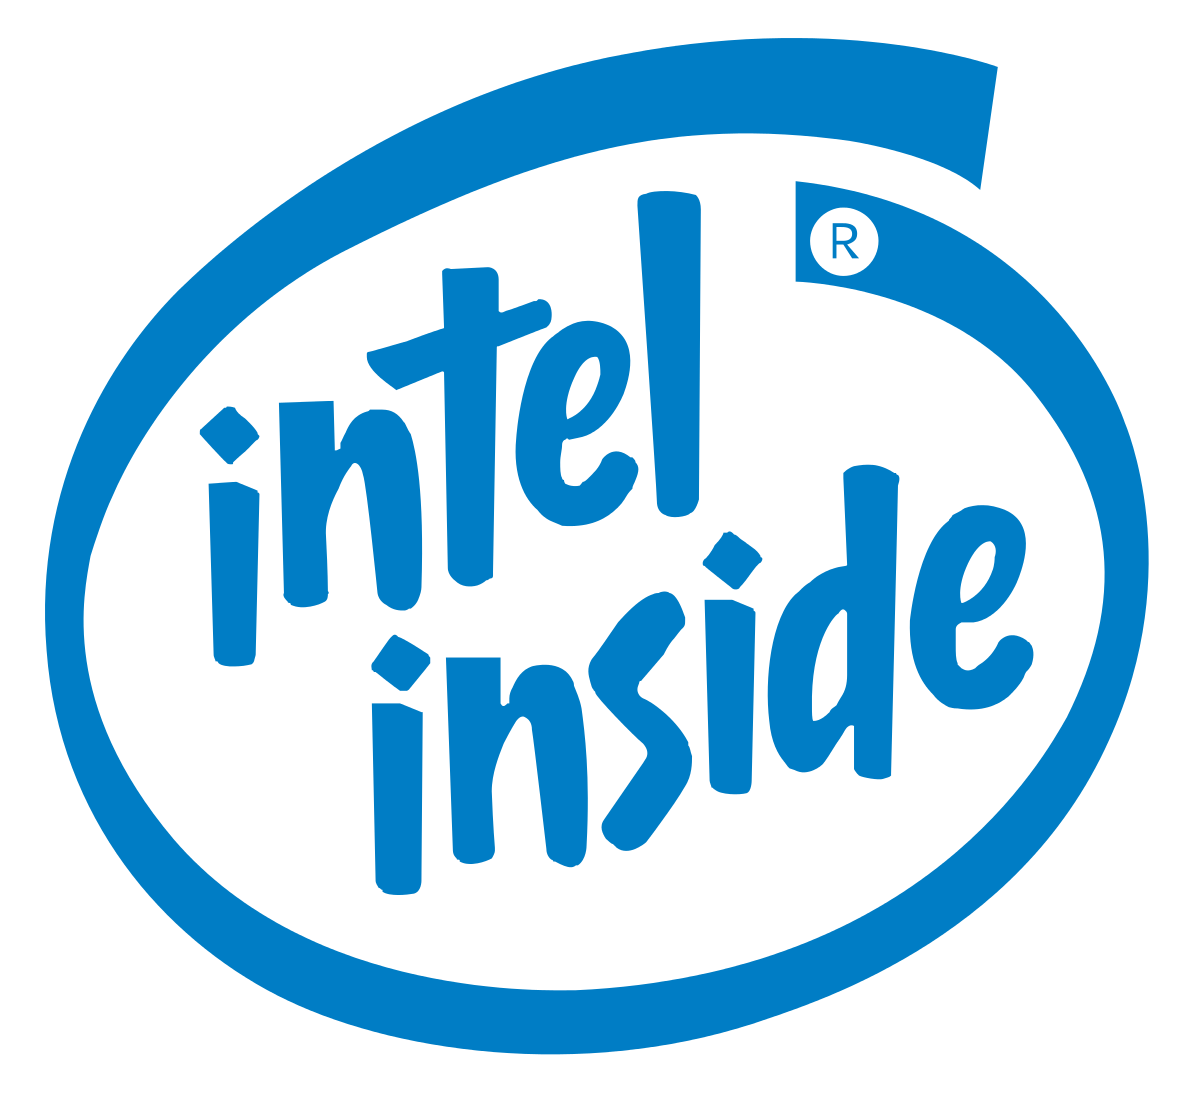 Light Blue Power Logo - Intel Logo, symbol, meaning, History and Evolution